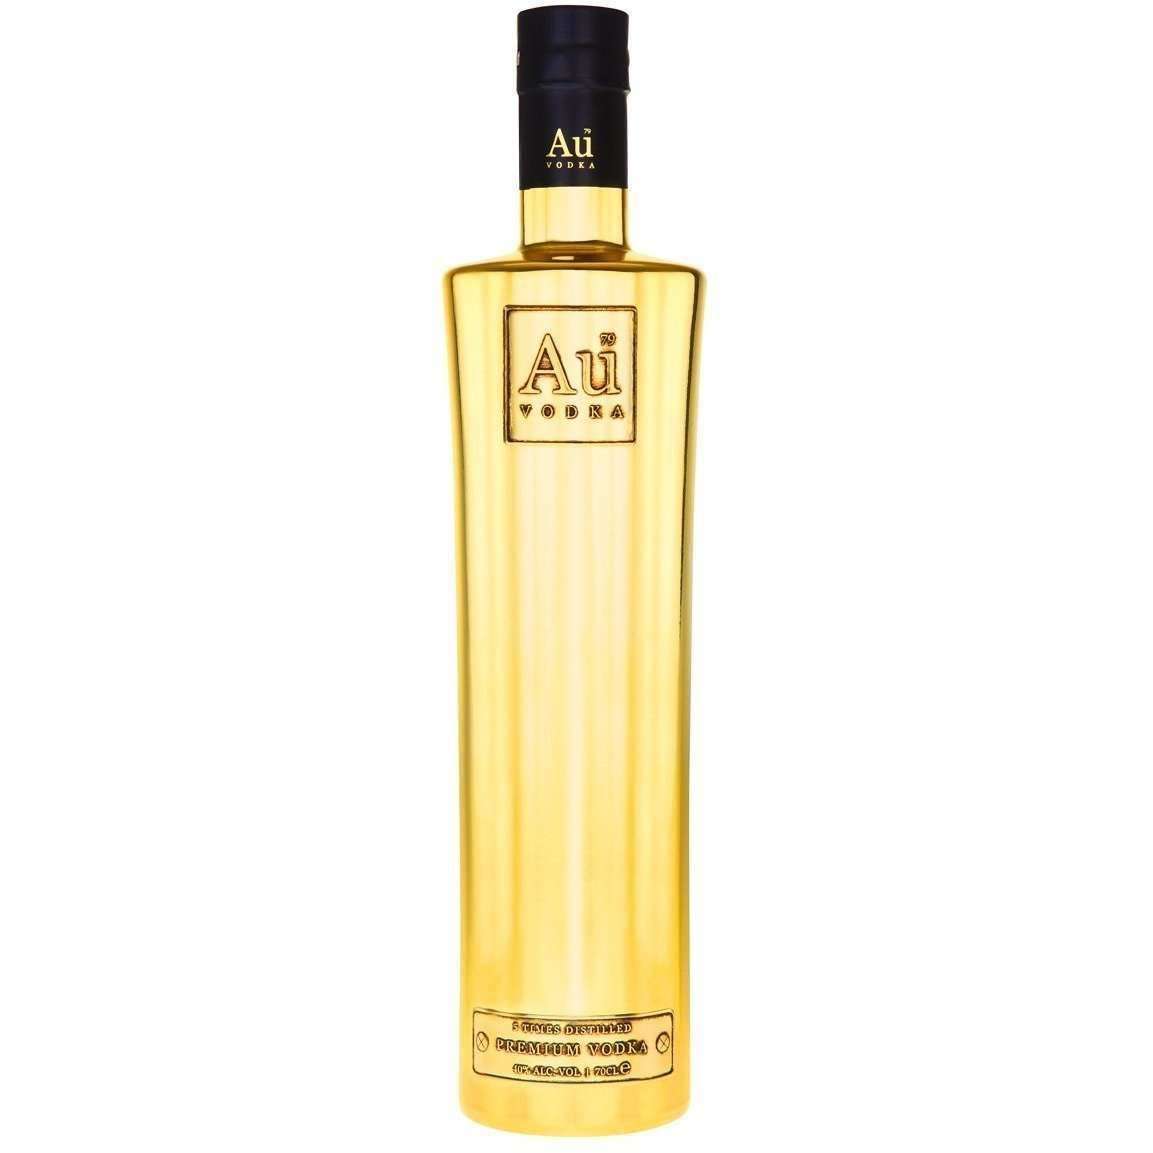 Au - Vodka - 700ml